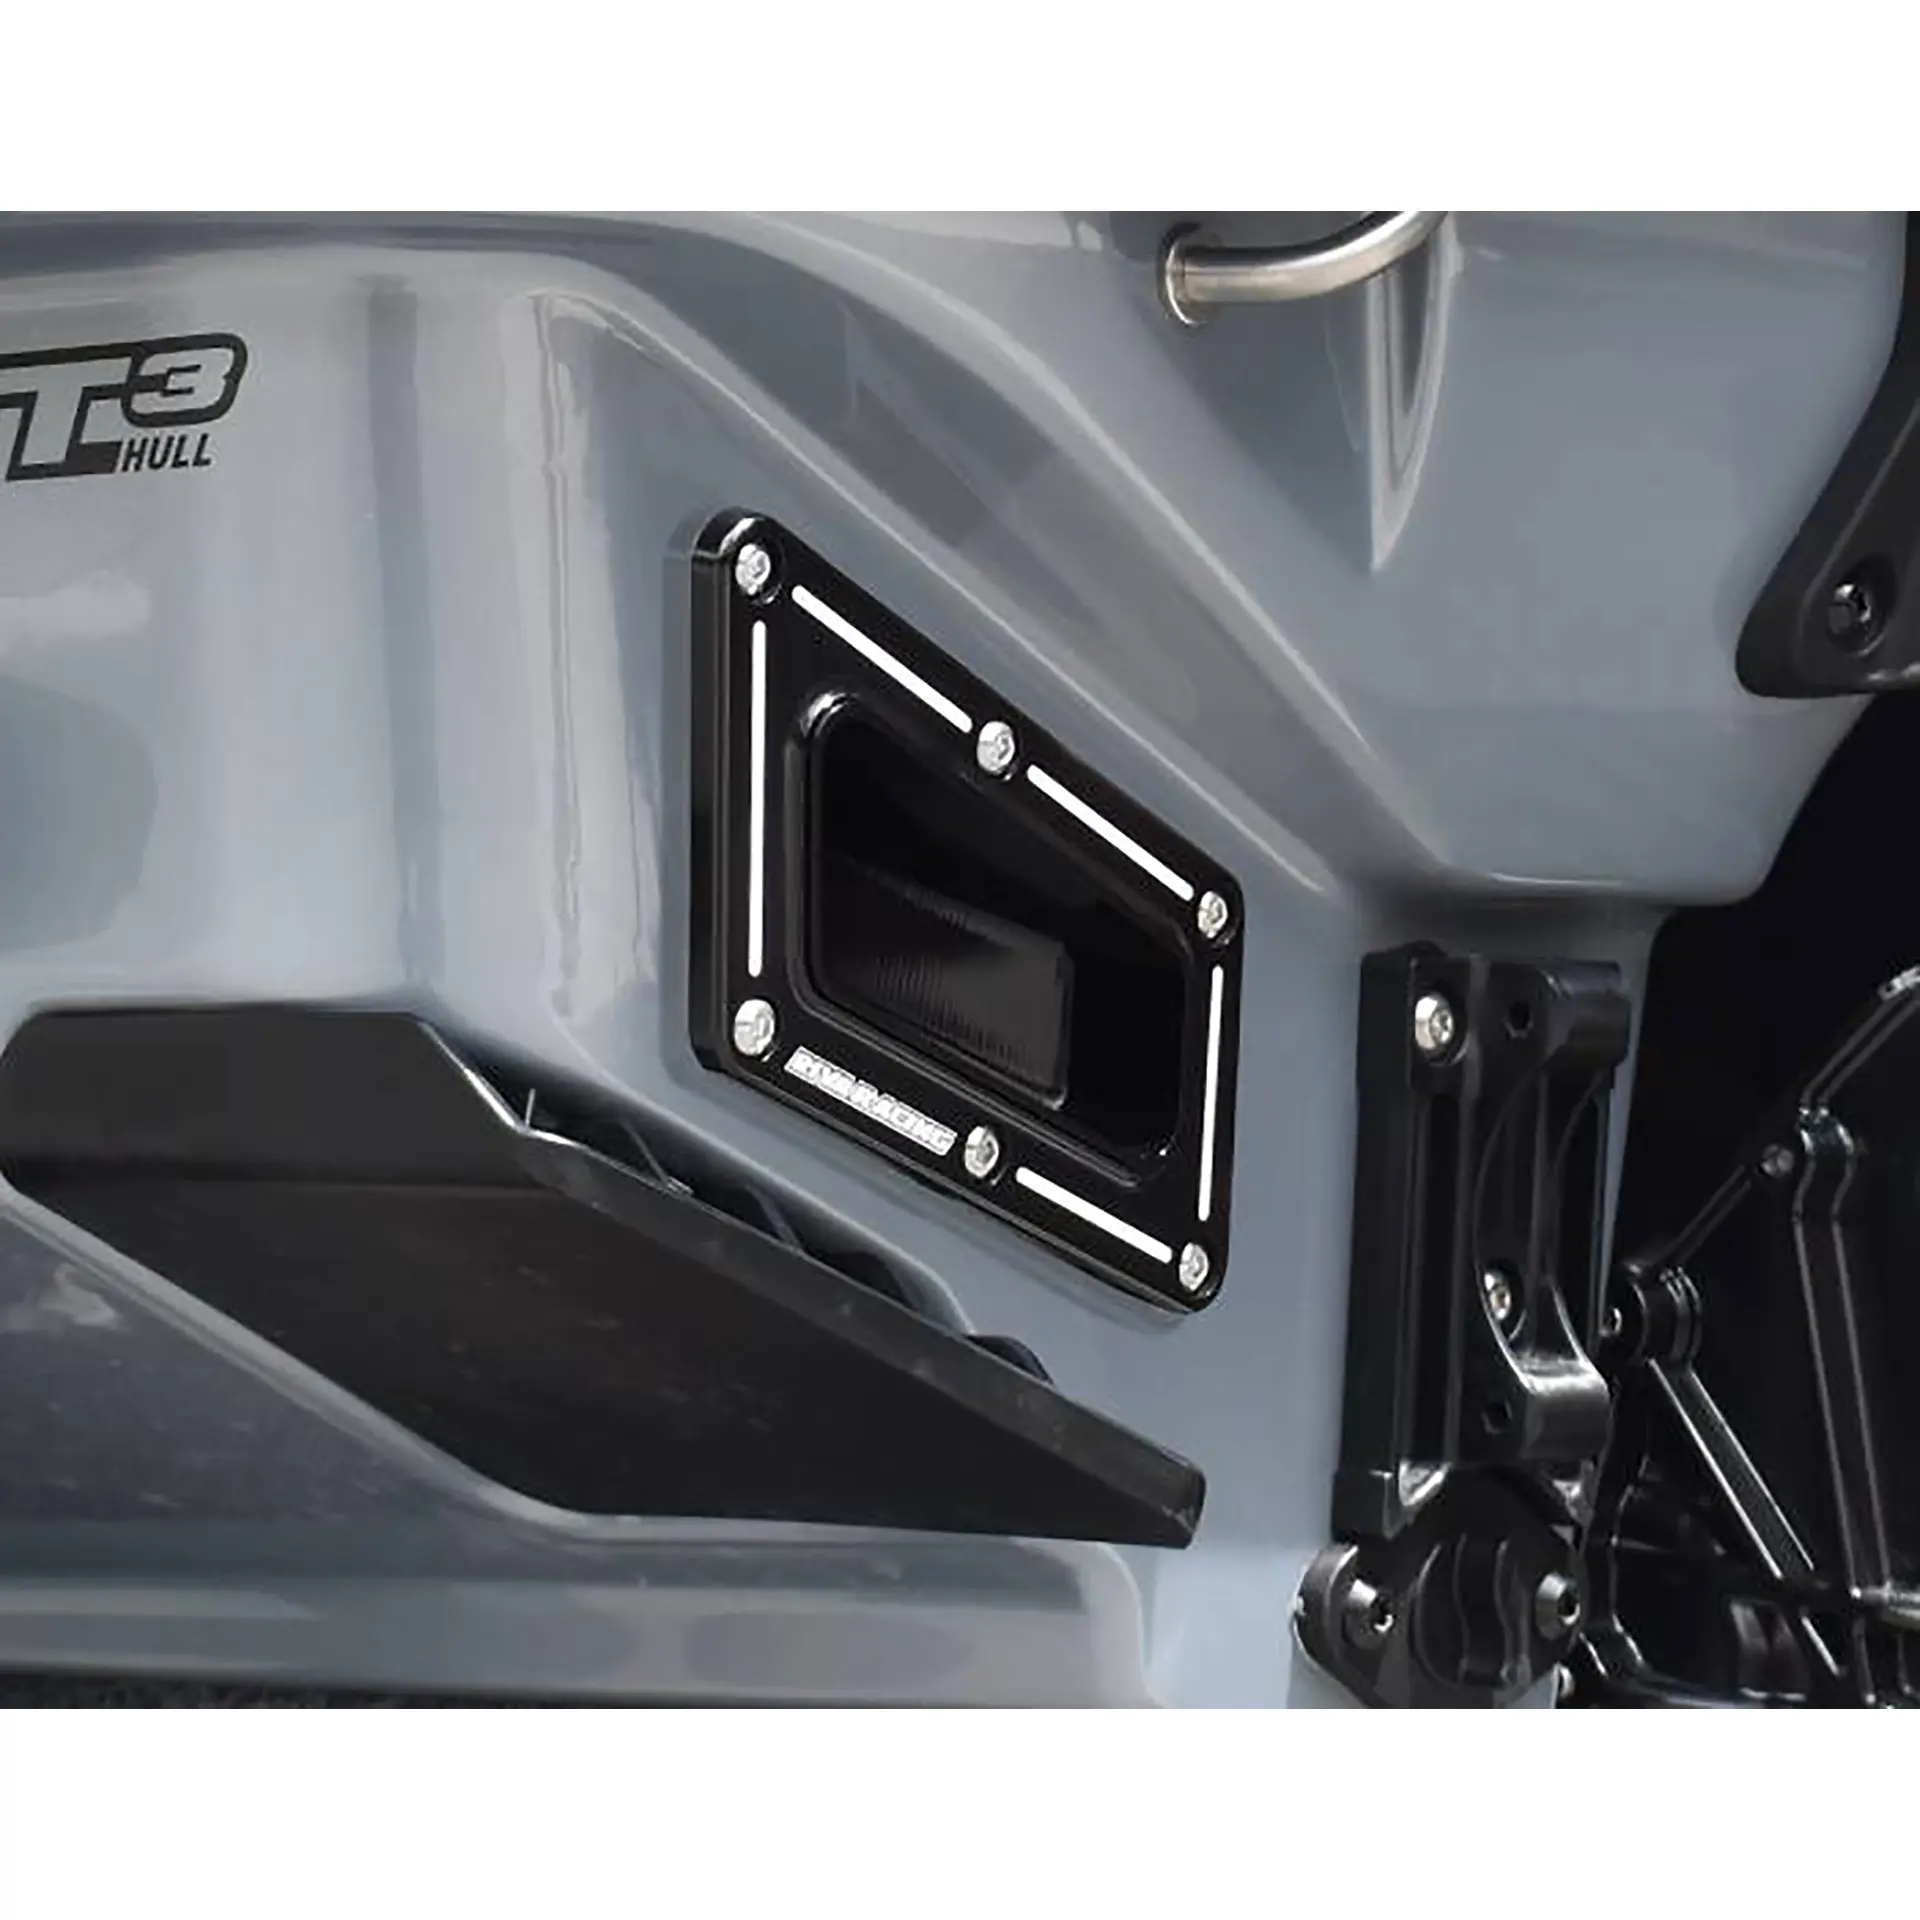 RIVA Sea-Doo RXT/GTX 300 Rear Exhaust Kit | Maptun Powersports